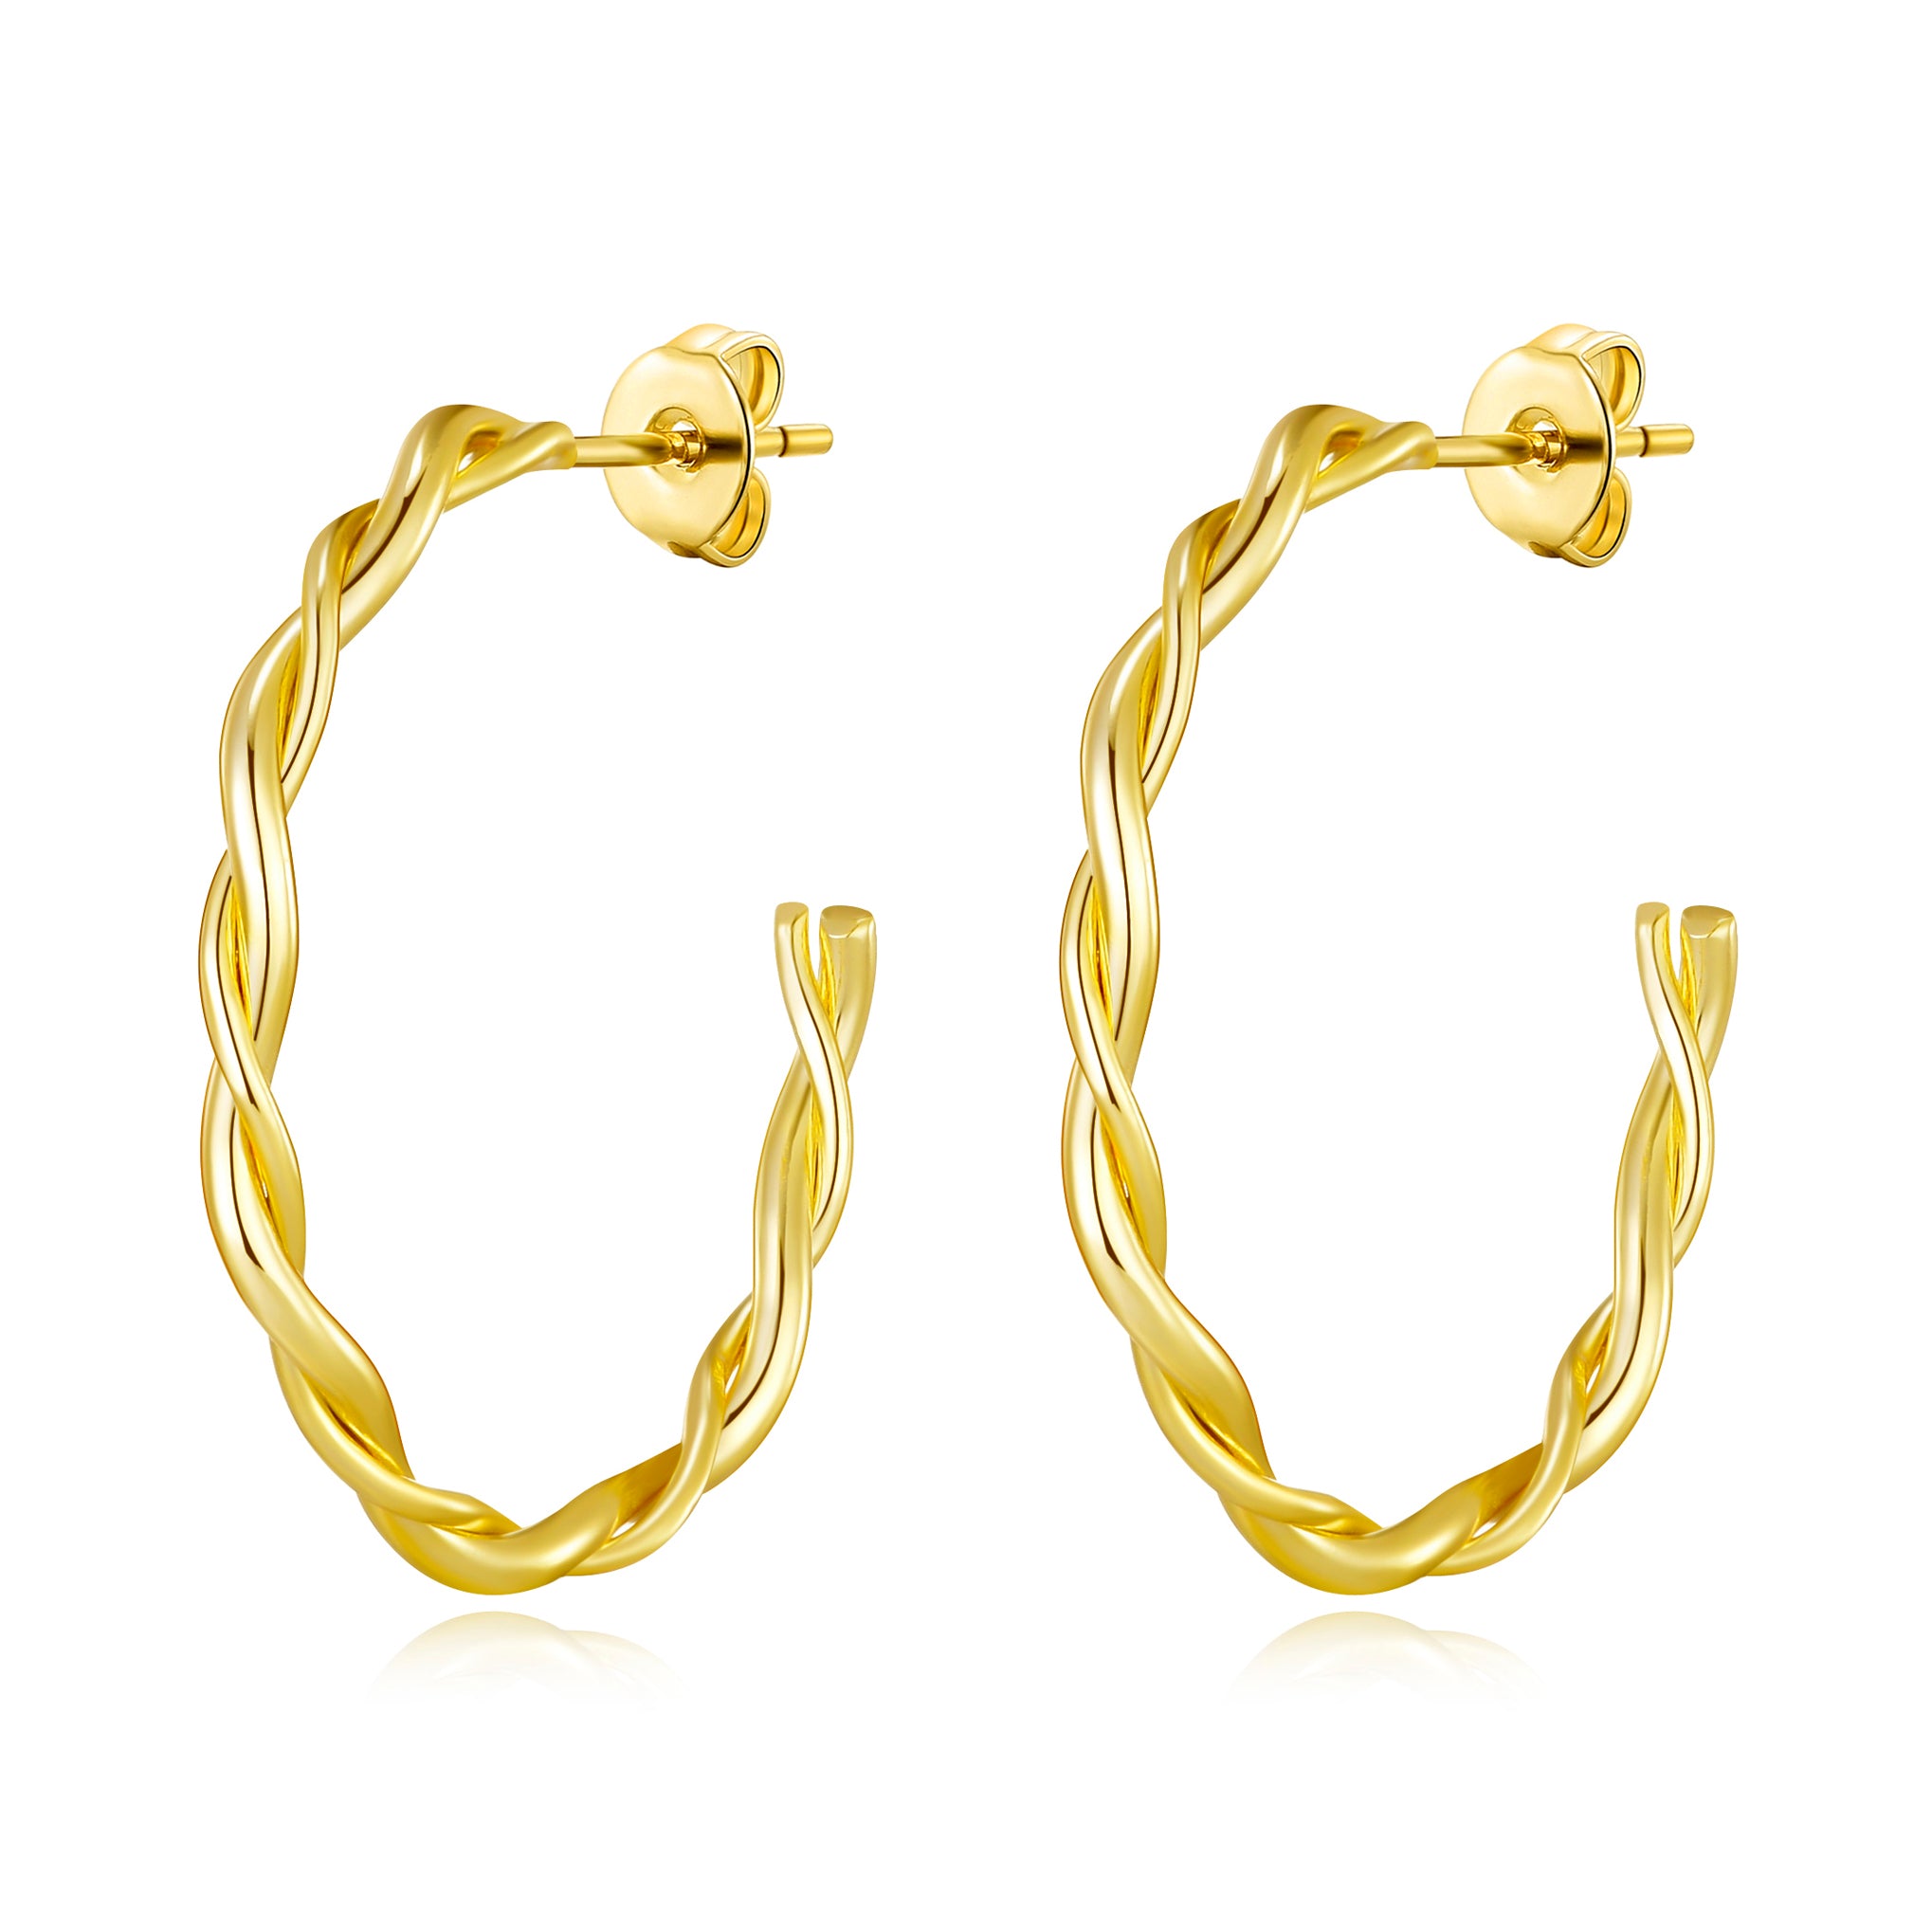 Gold Plated 30mm Twisted Hoop Earrings by Philip Jones Jewellery